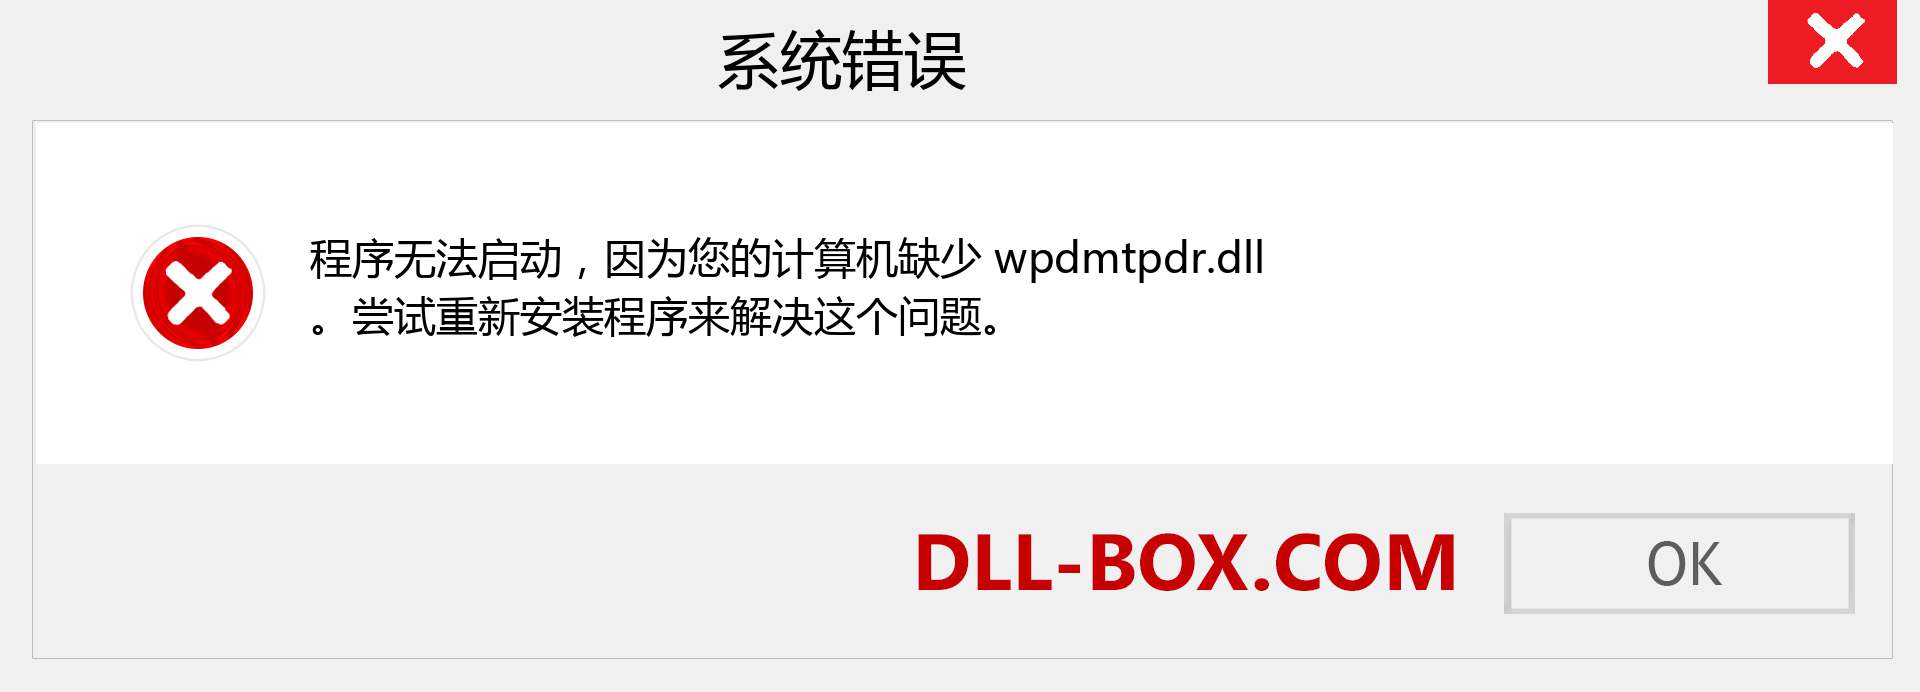 wpdmtpdr.dll 文件丢失？。 适用于 Windows 7、8、10 的下载 - 修复 Windows、照片、图像上的 wpdmtpdr dll 丢失错误